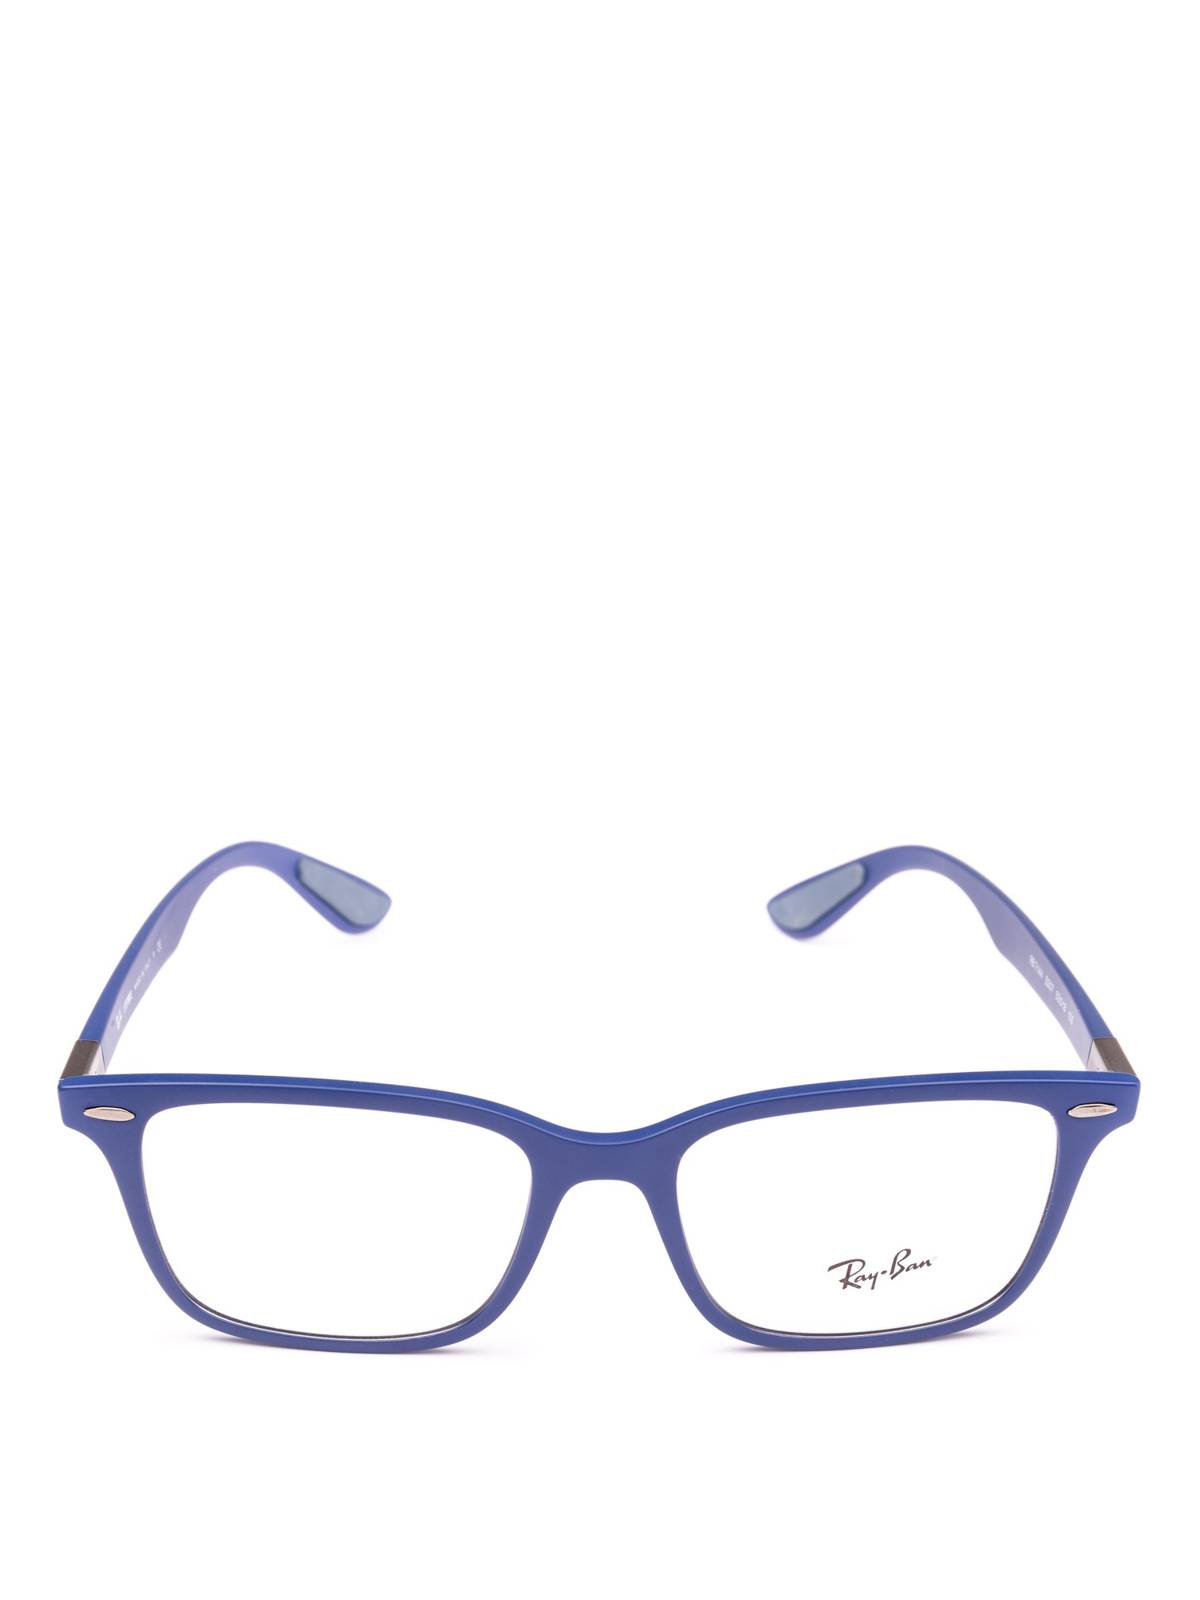 rayban glasses online